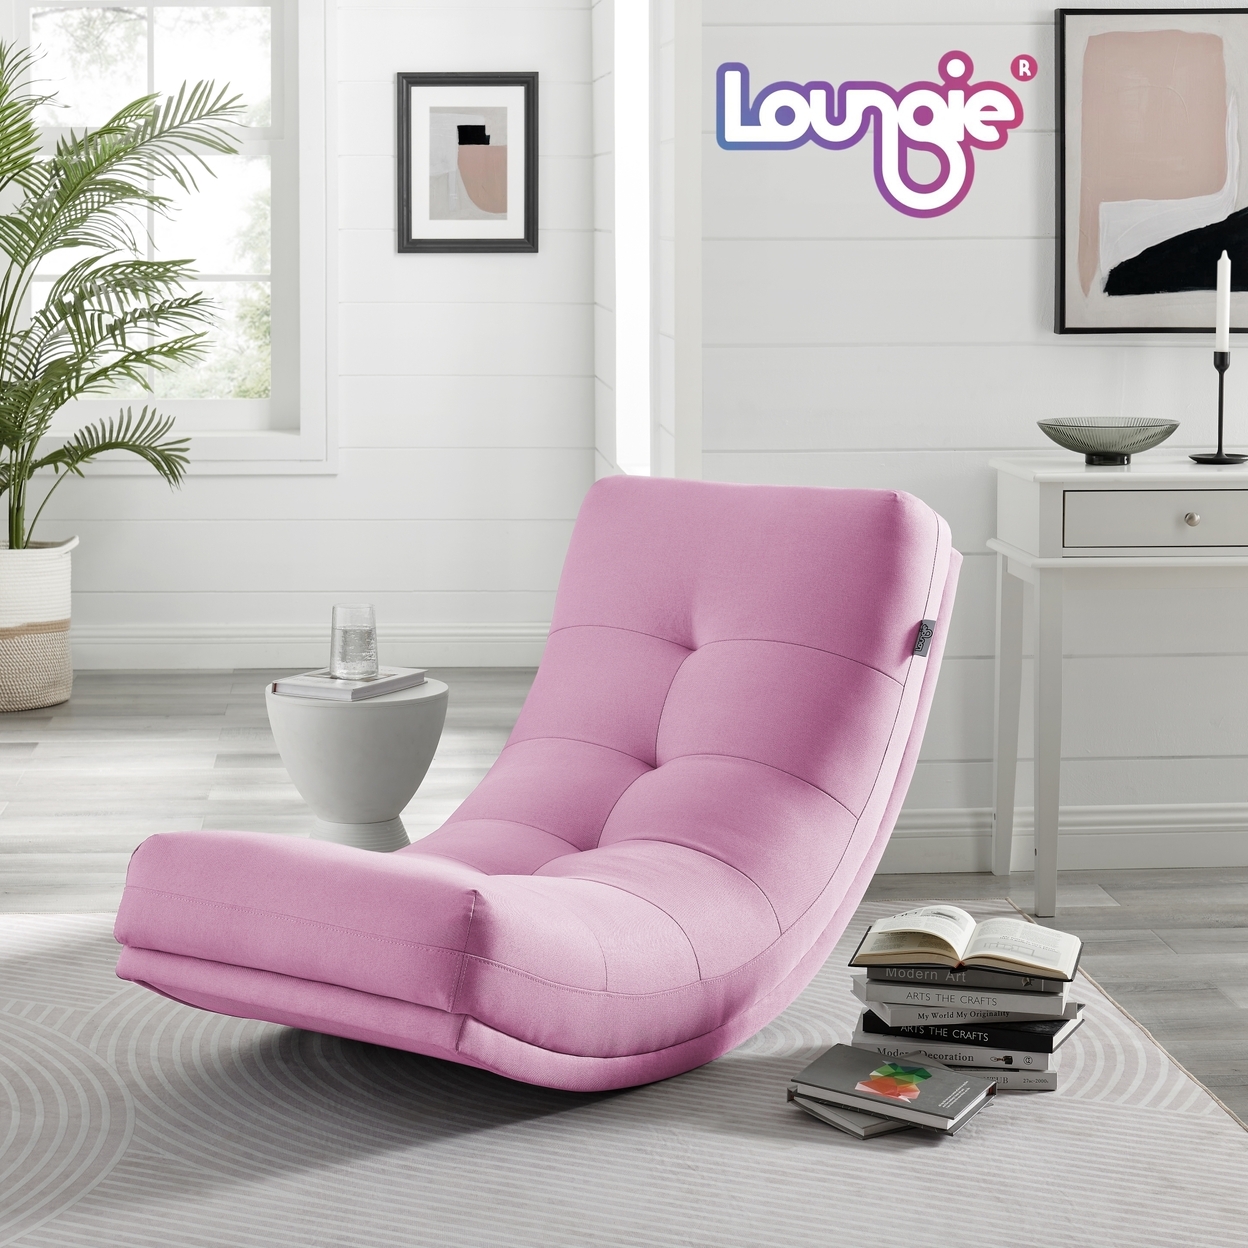 Kaniya Chair - Linen Upholstery, Tufted, Gentle Rocking Design, Ergonomic Shape And Padded Seat - Pink